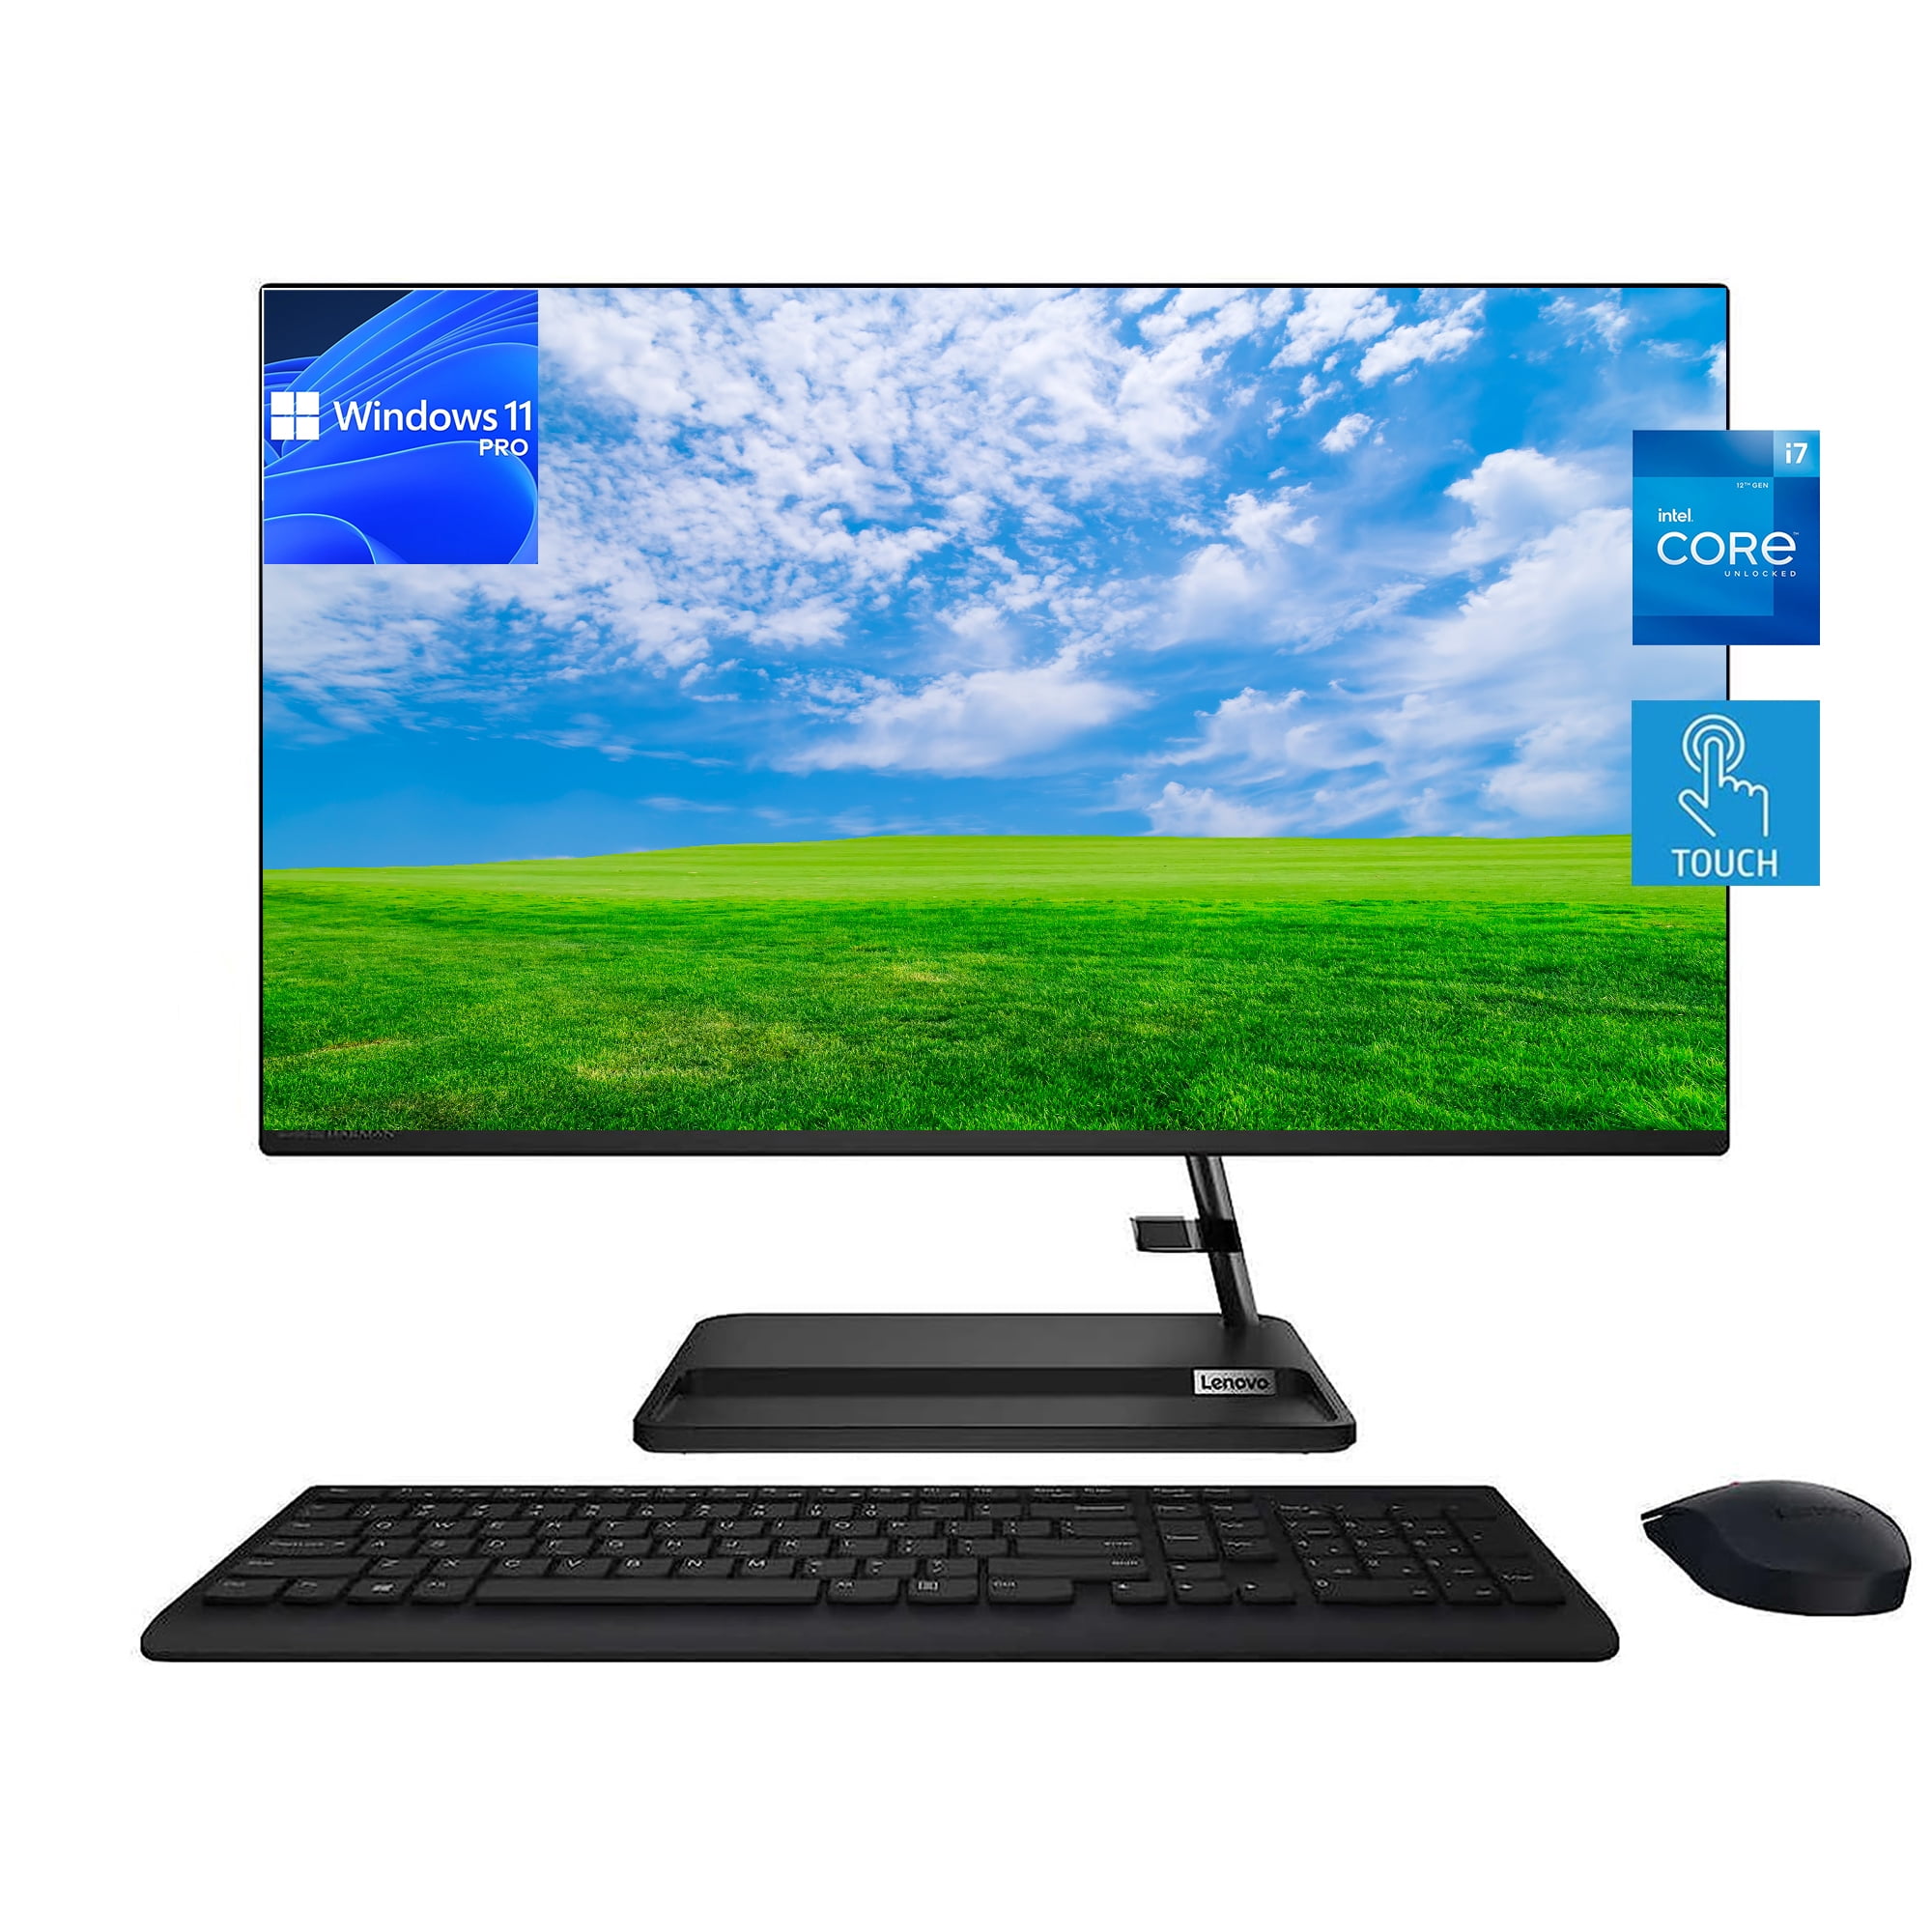 Lenovo IdeaCentre 3 All-in-One [Windows 11 Pro] Business Desktop